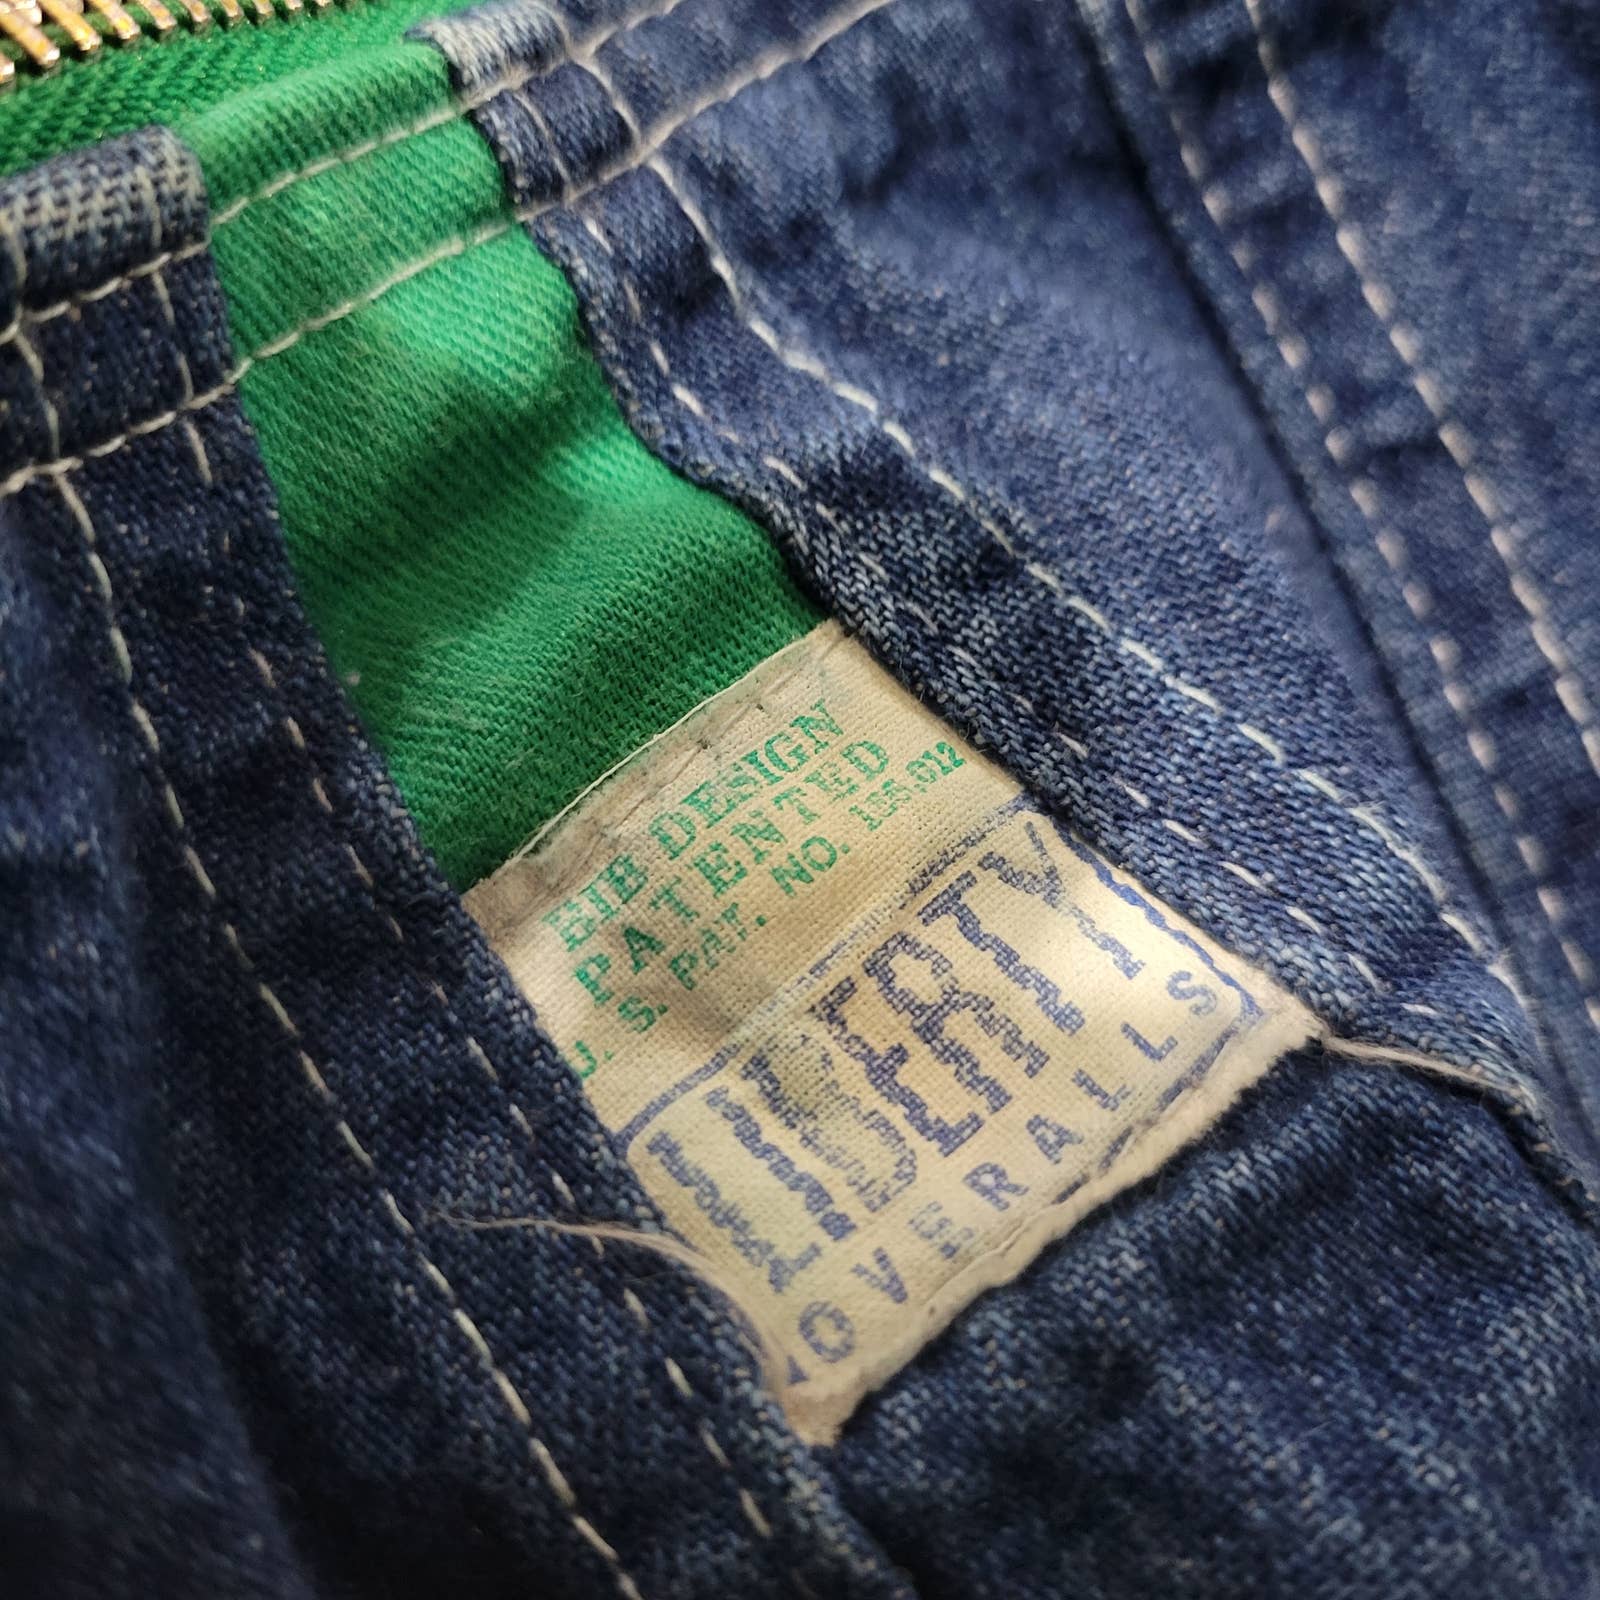 Vintage Liberty Bib Overalls Blue Denim Jean Straight Leg Button Fly Size 14 Boys